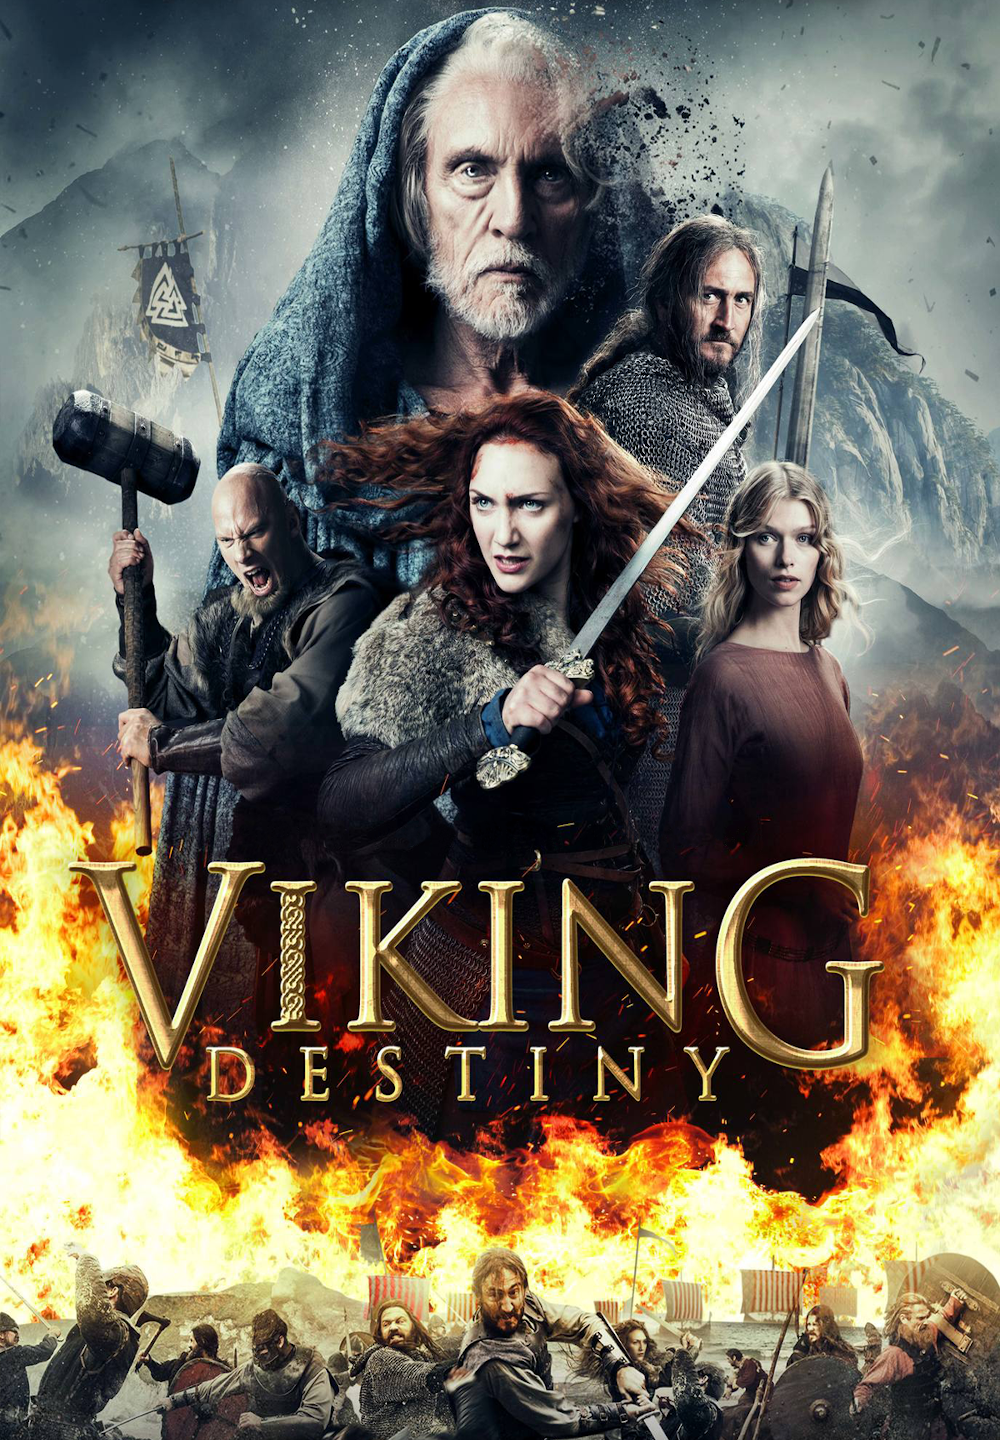 Viking Destiny [HD] (2018)